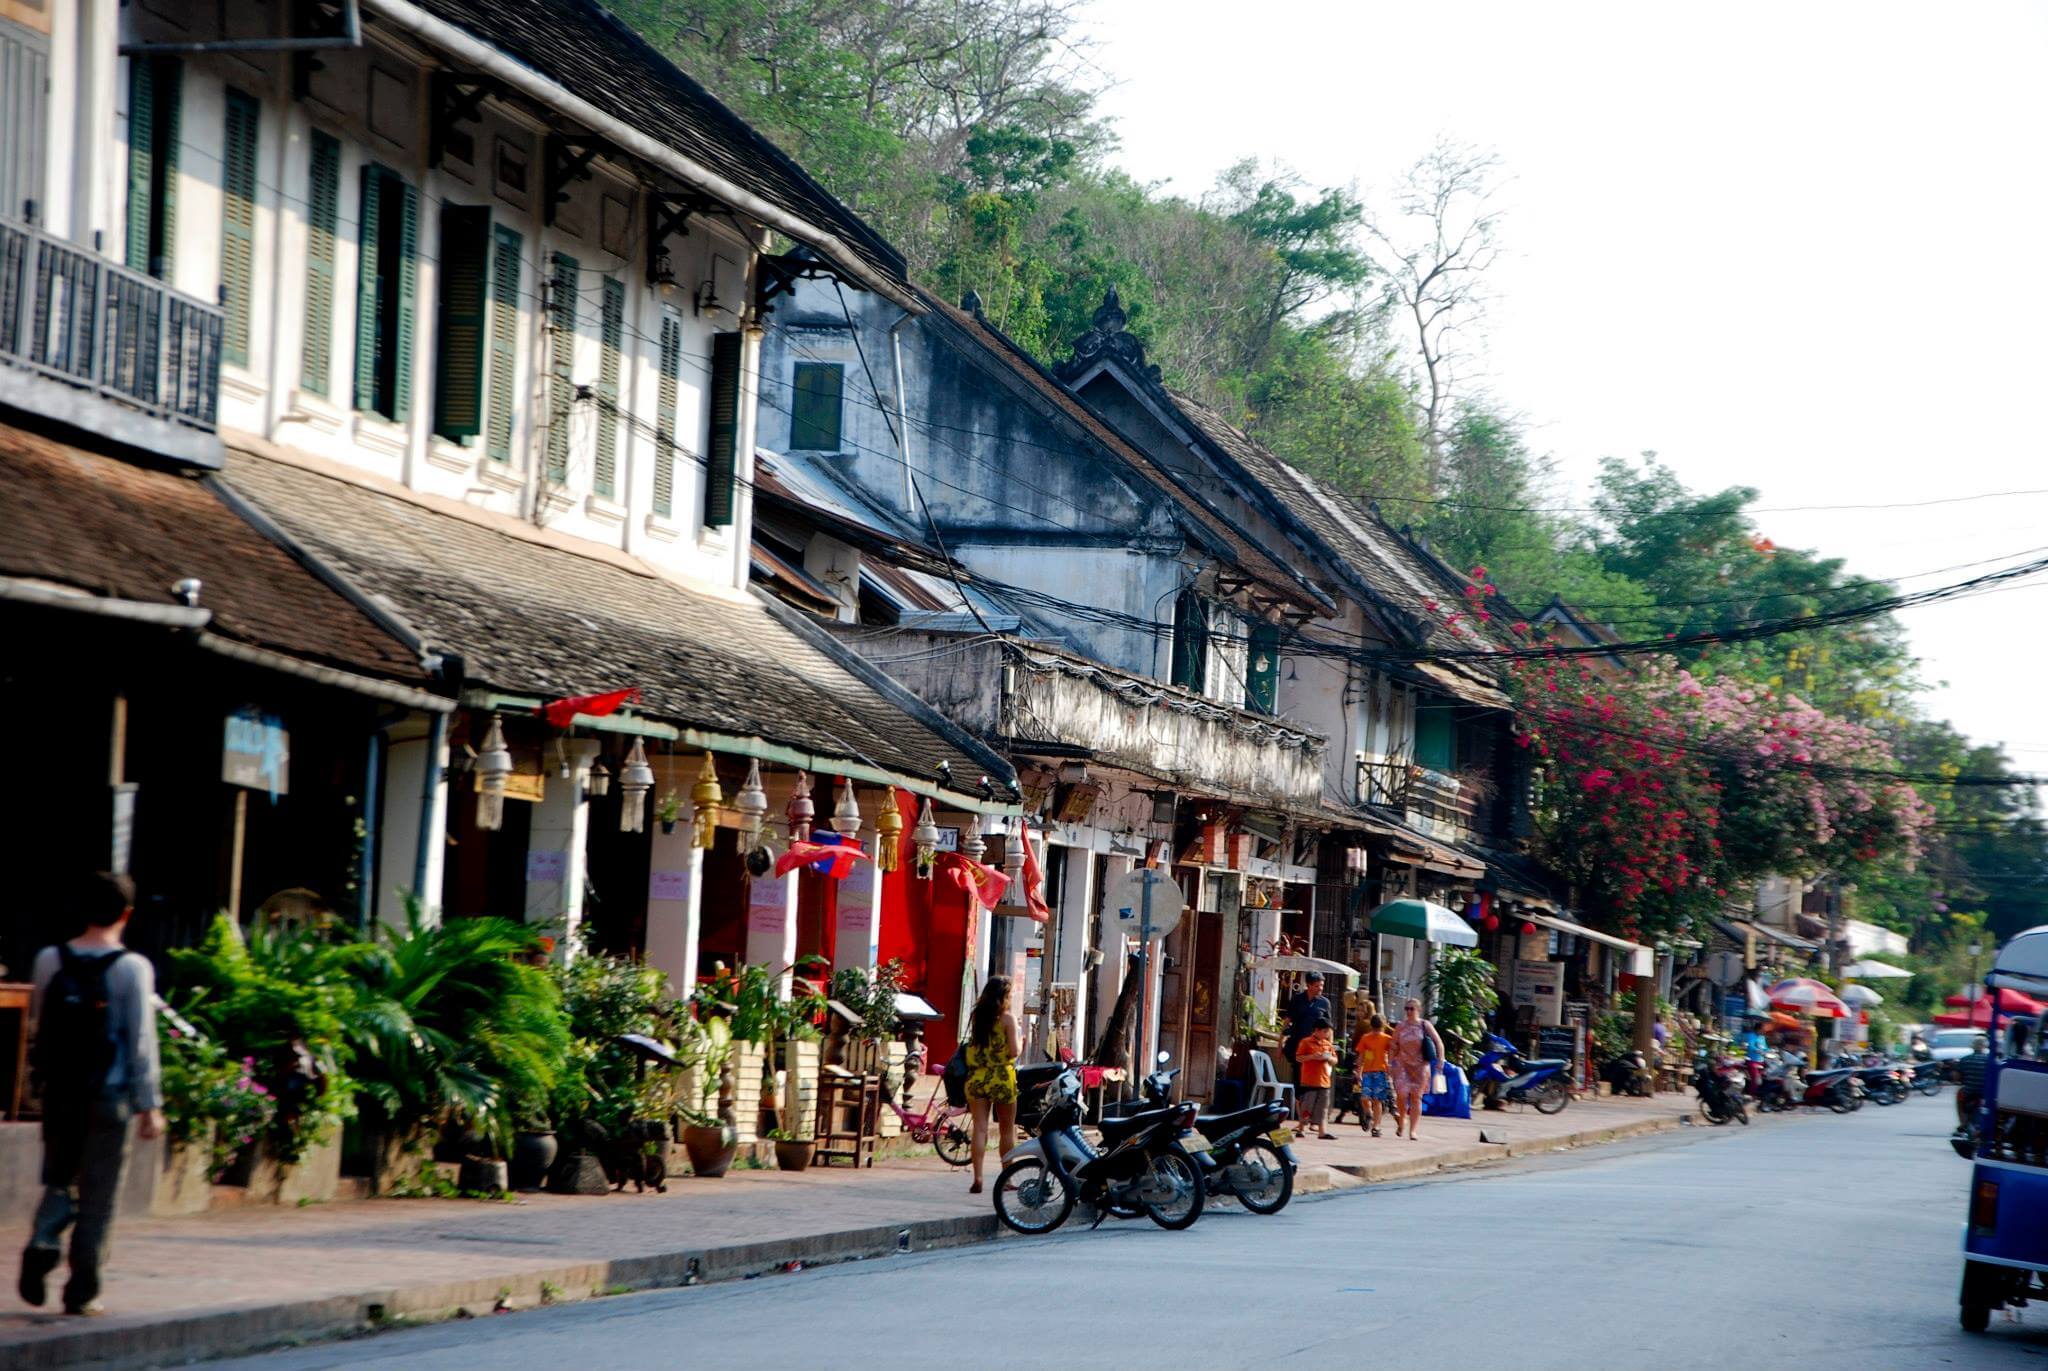 Explore Luang Prabang: the ancient capital of Laos